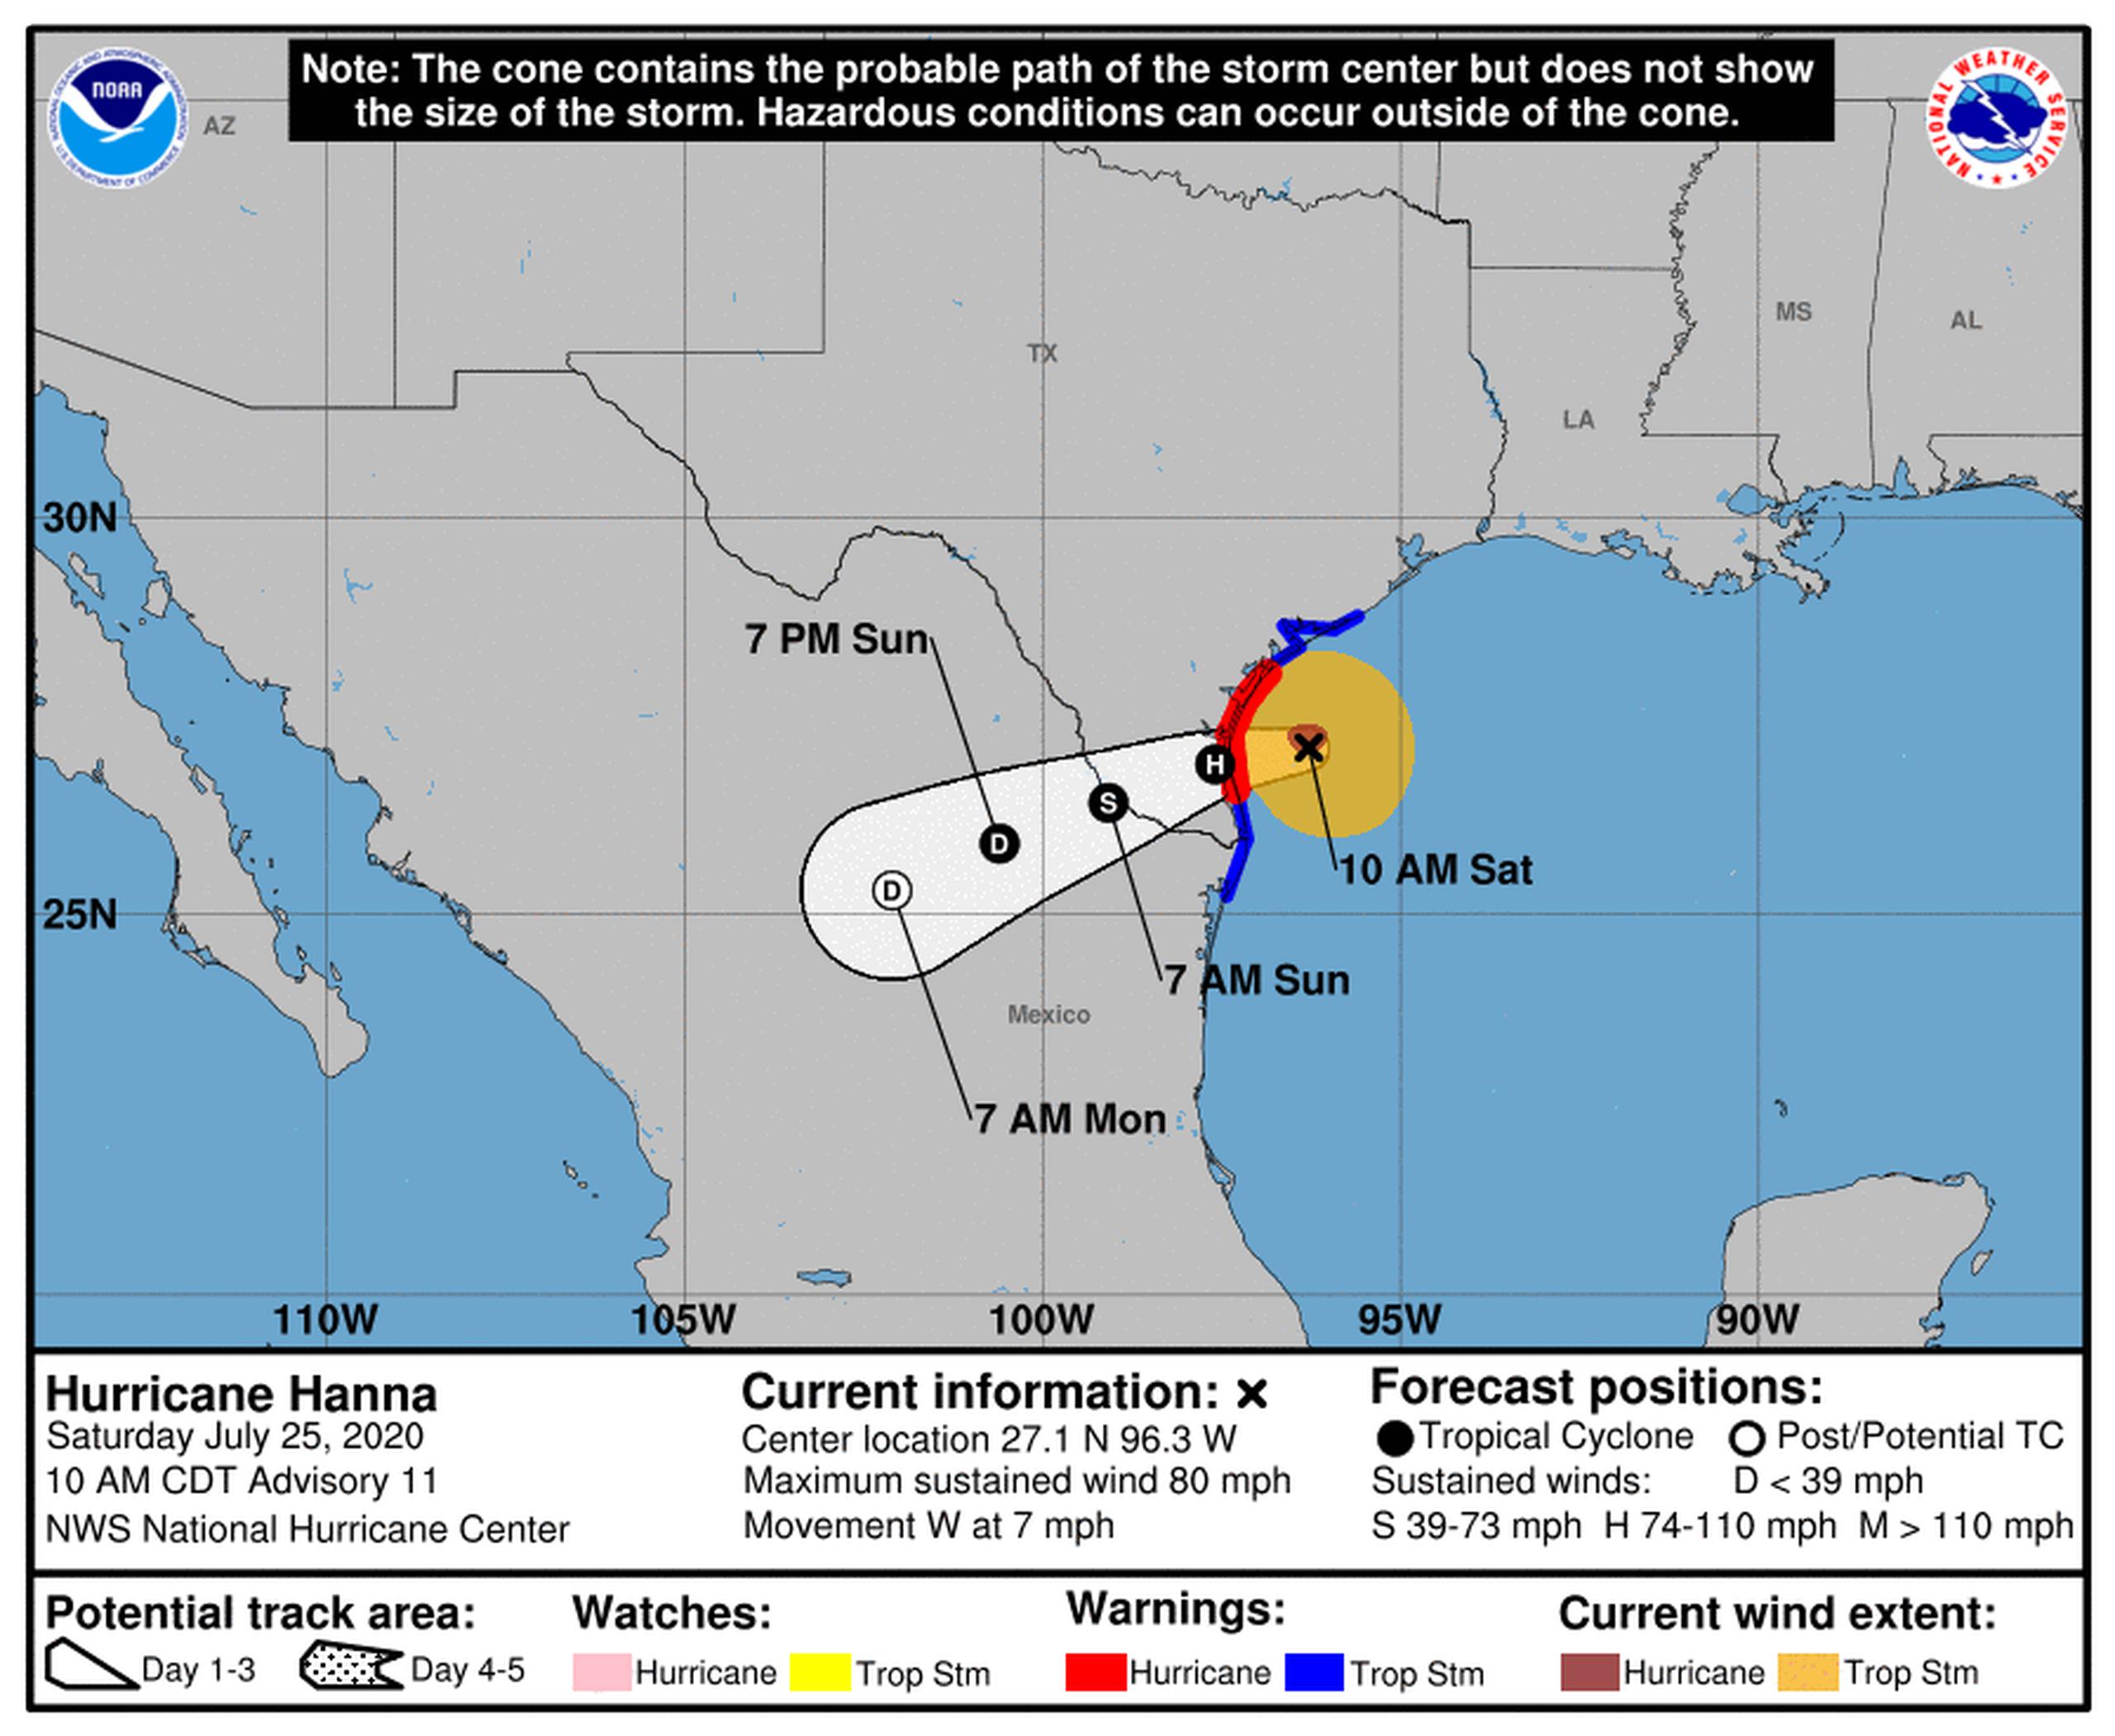 Pronóstico del huracán Hanna emitido a las 11:00 de la mañana.